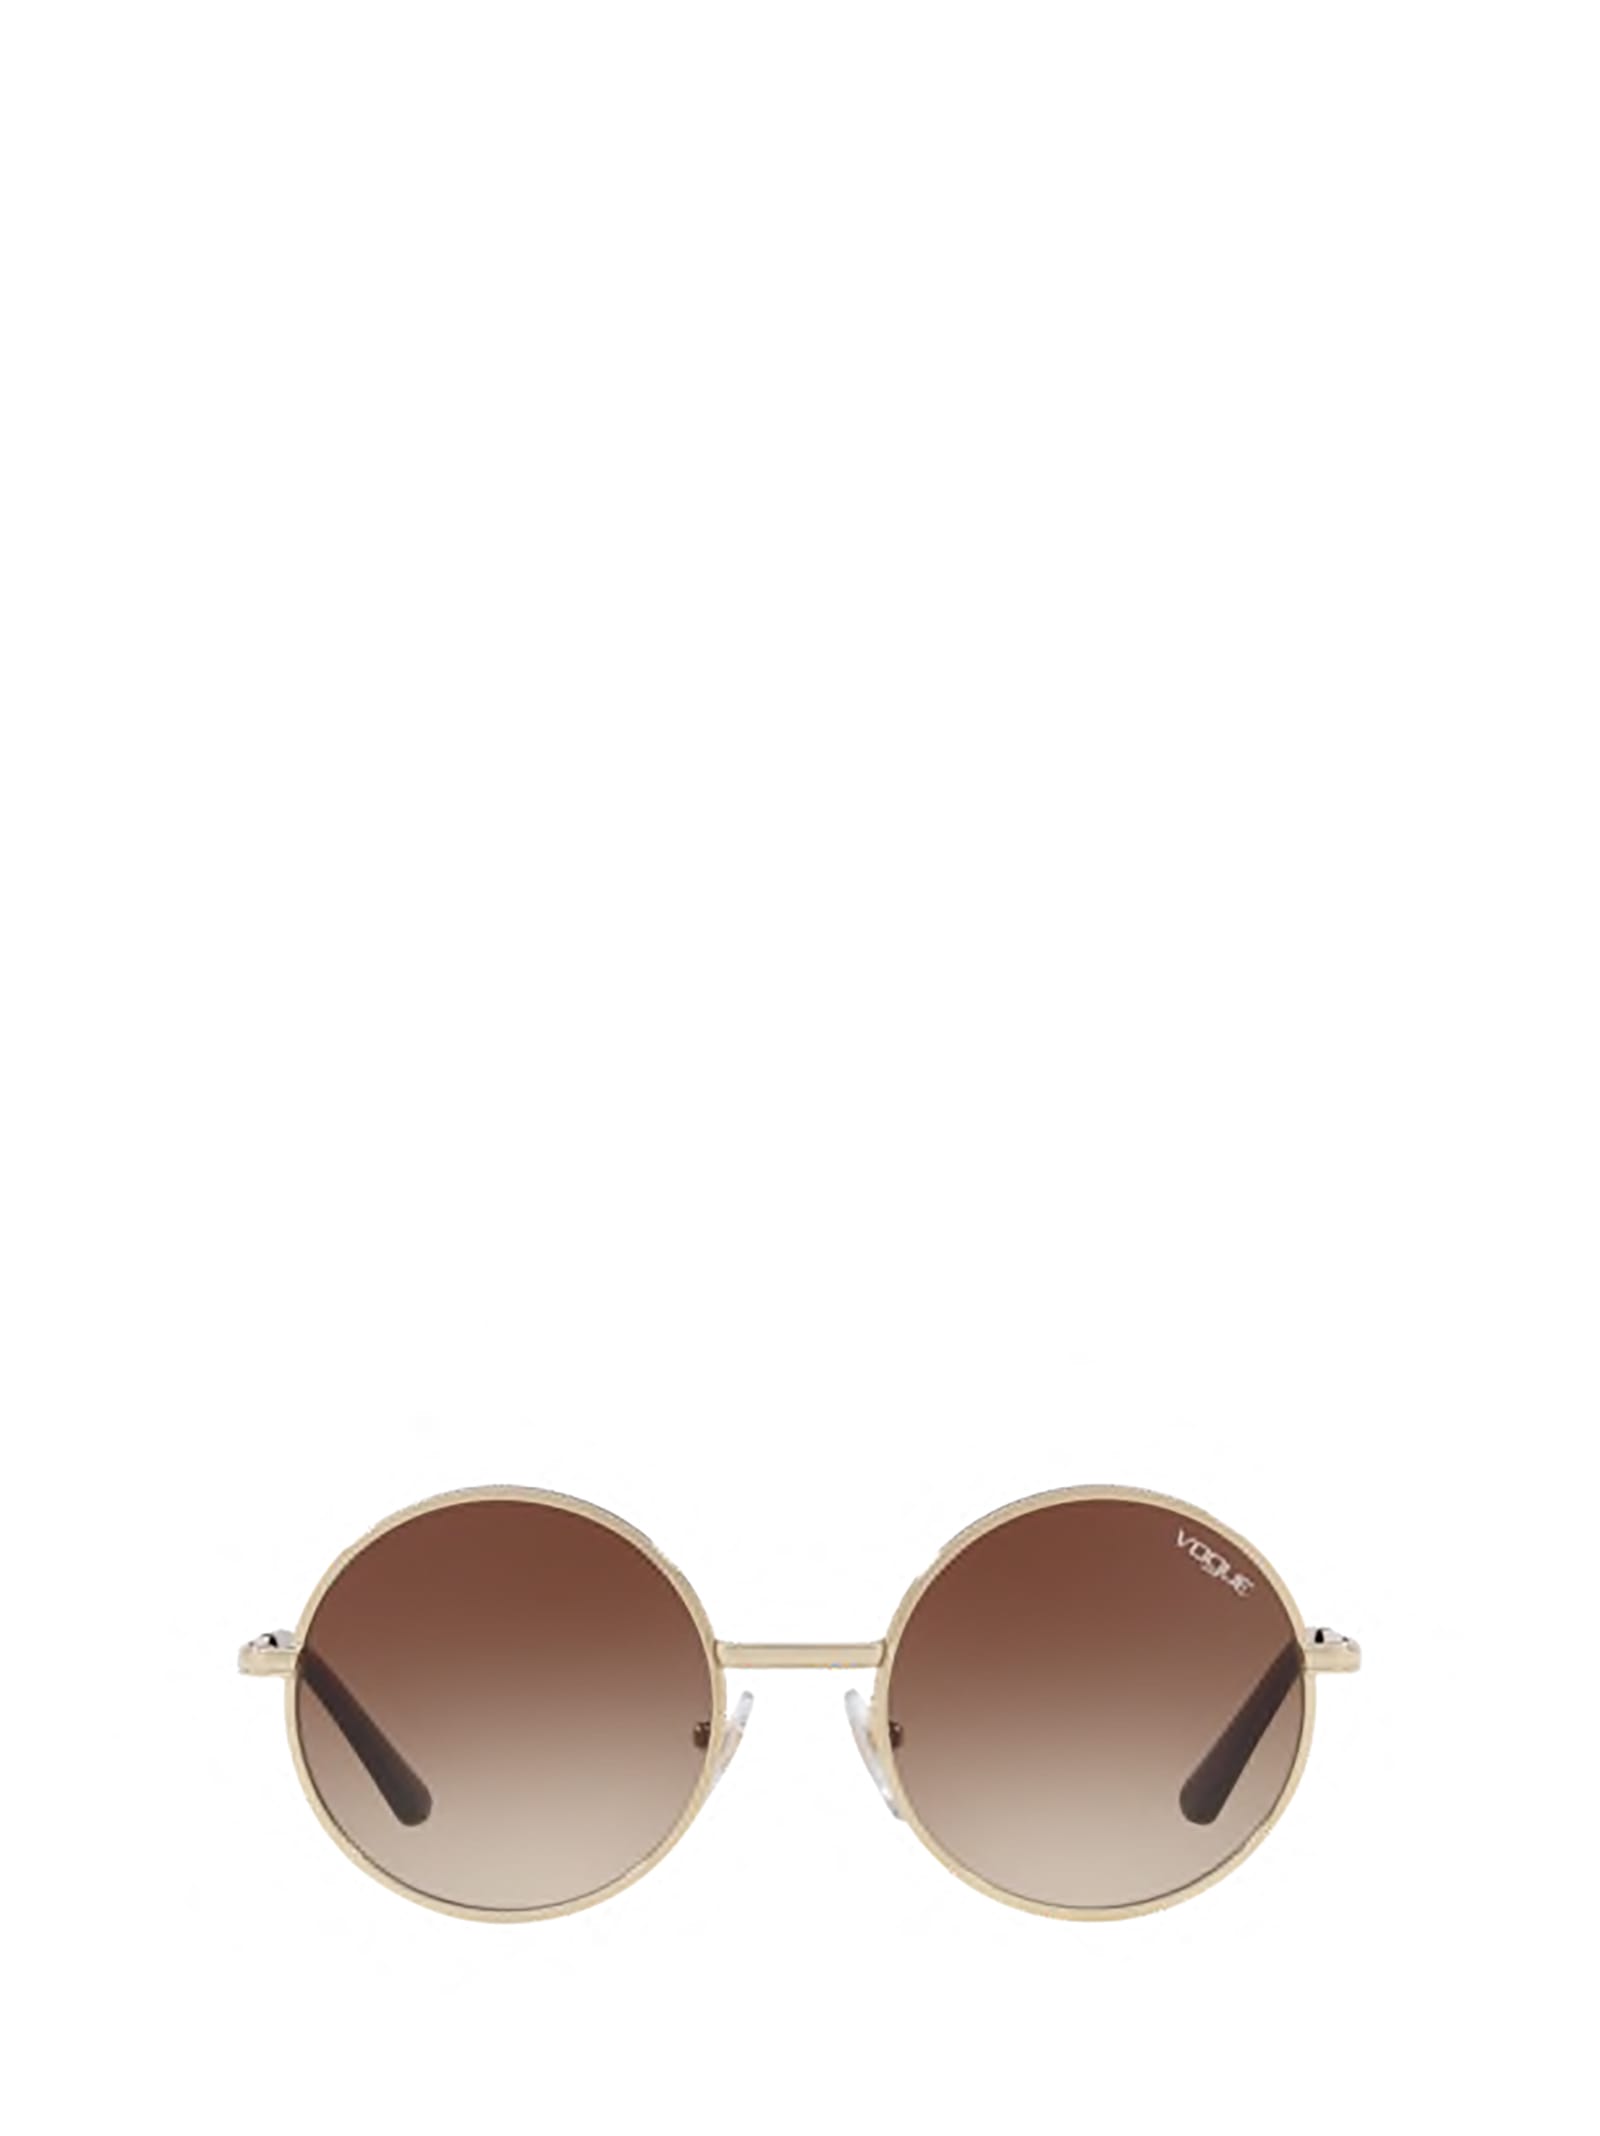 Vogue Eyewear Vo4085s Pale Gold Sunglasses